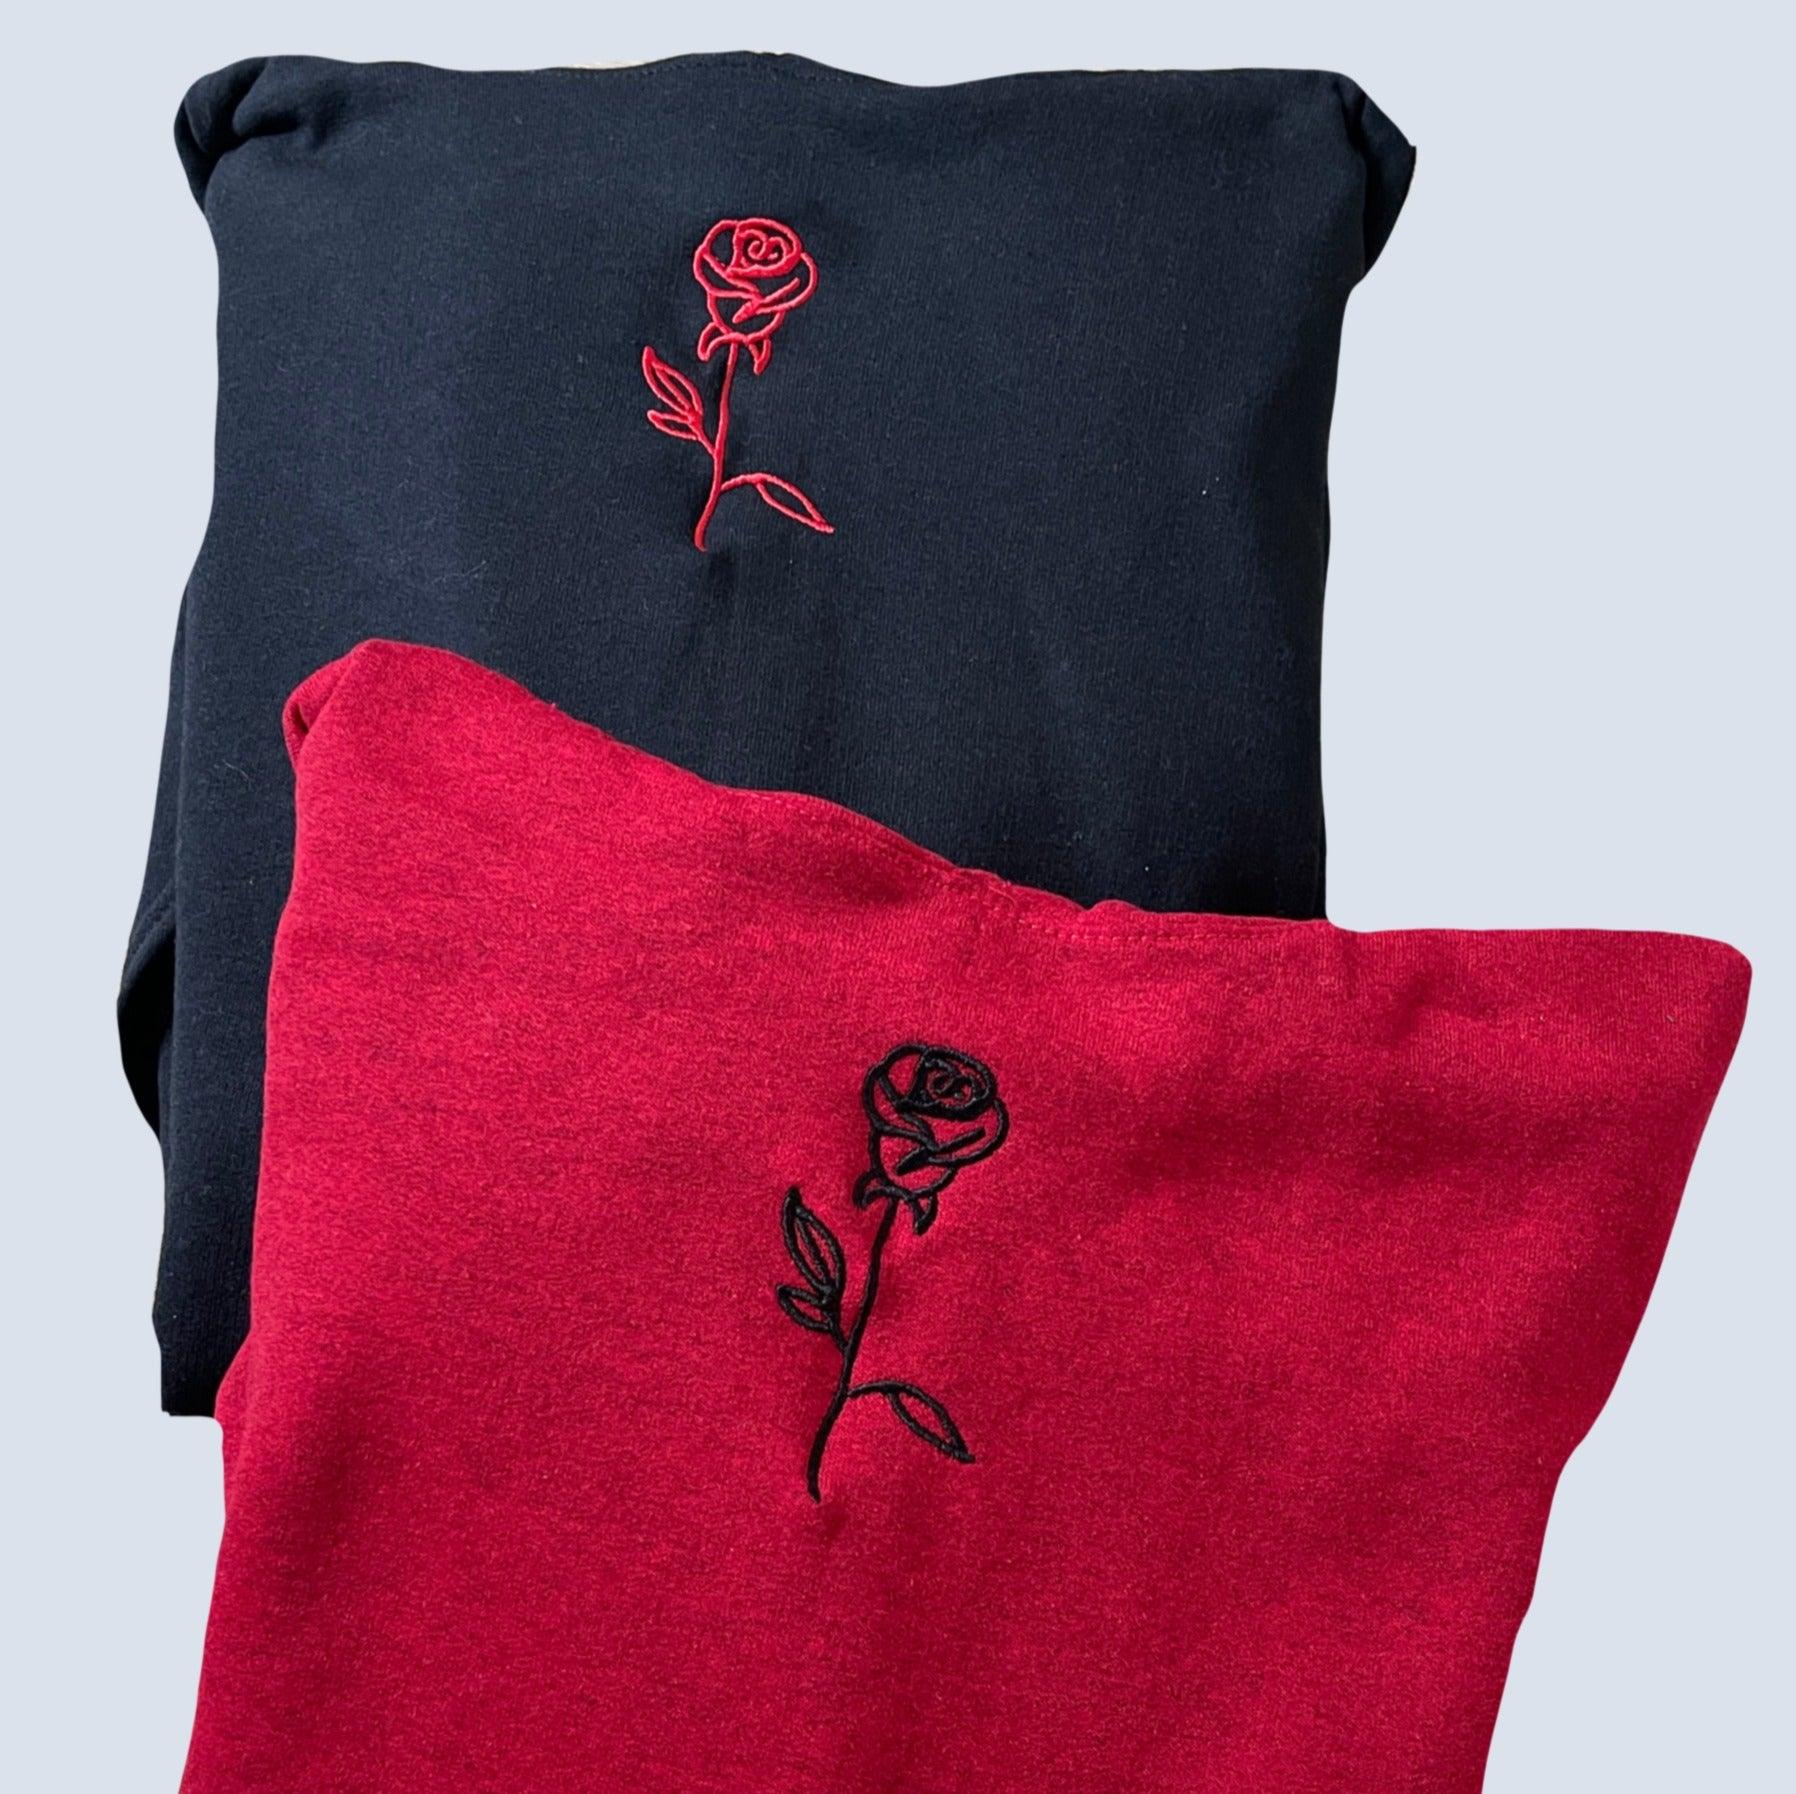 Custom Rose Embroidered Matching Set Couple Sweatshirt Hoodies